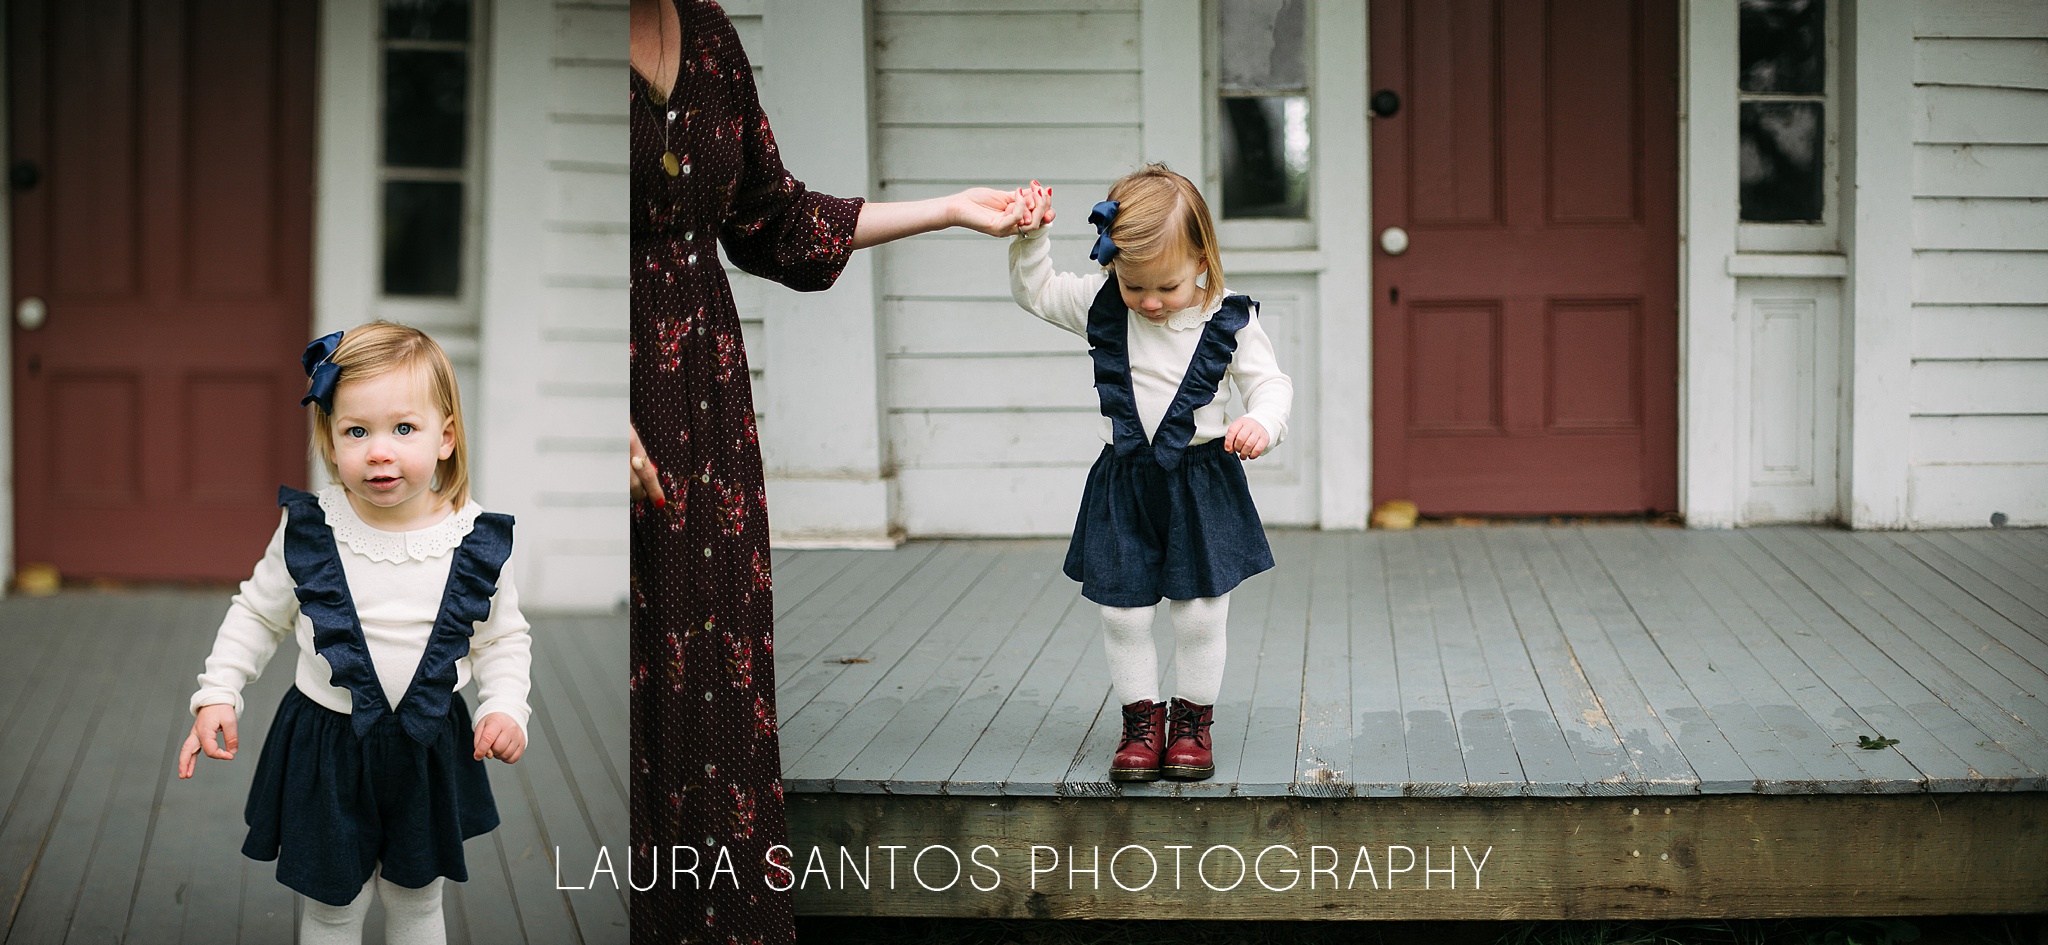 Laura Santos Photography Portland Oregon Family Photographer_0489.jpg